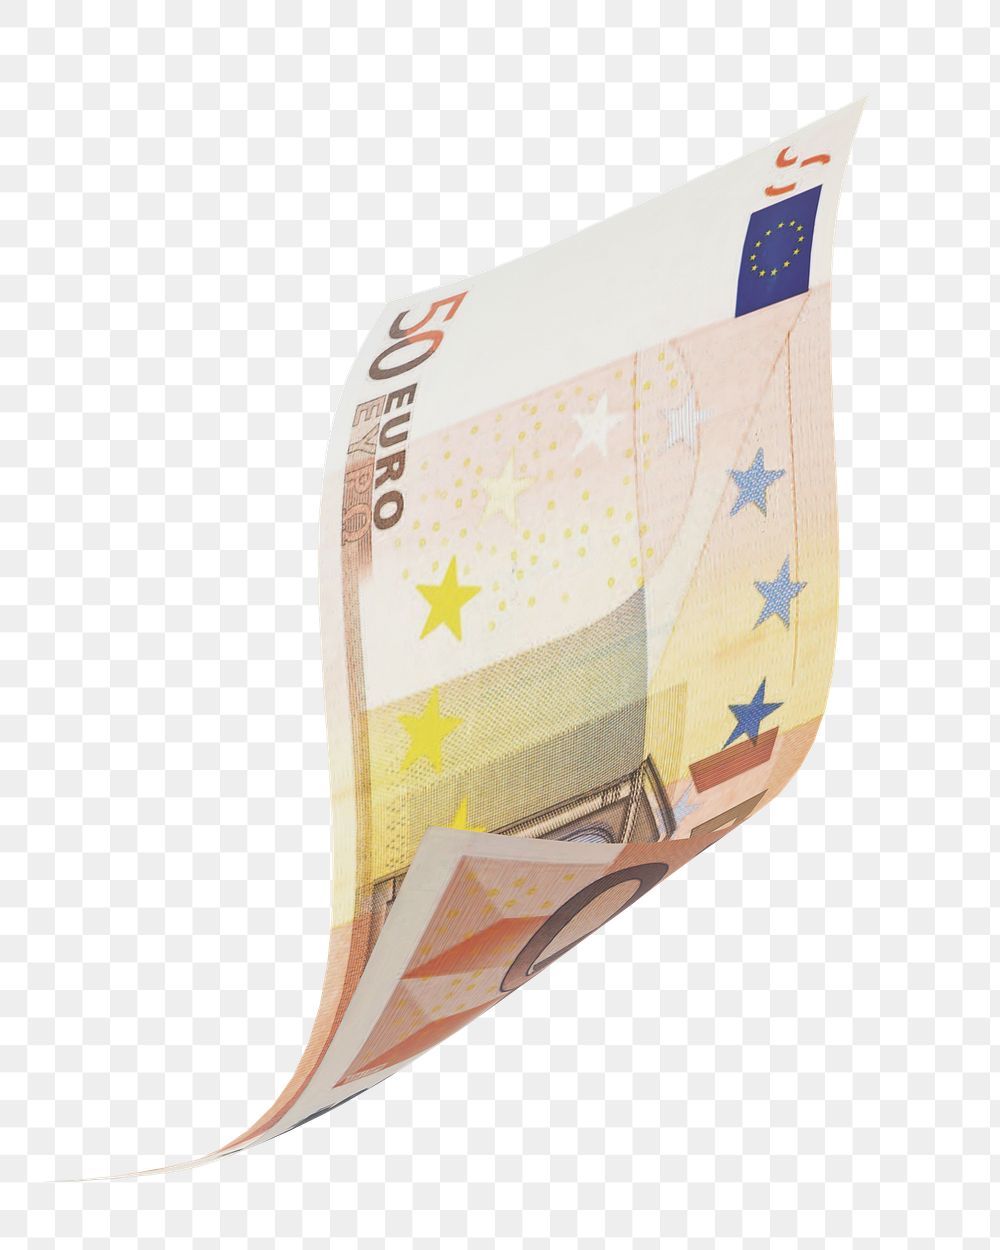 Png 50 Euros bank notes, transparent background